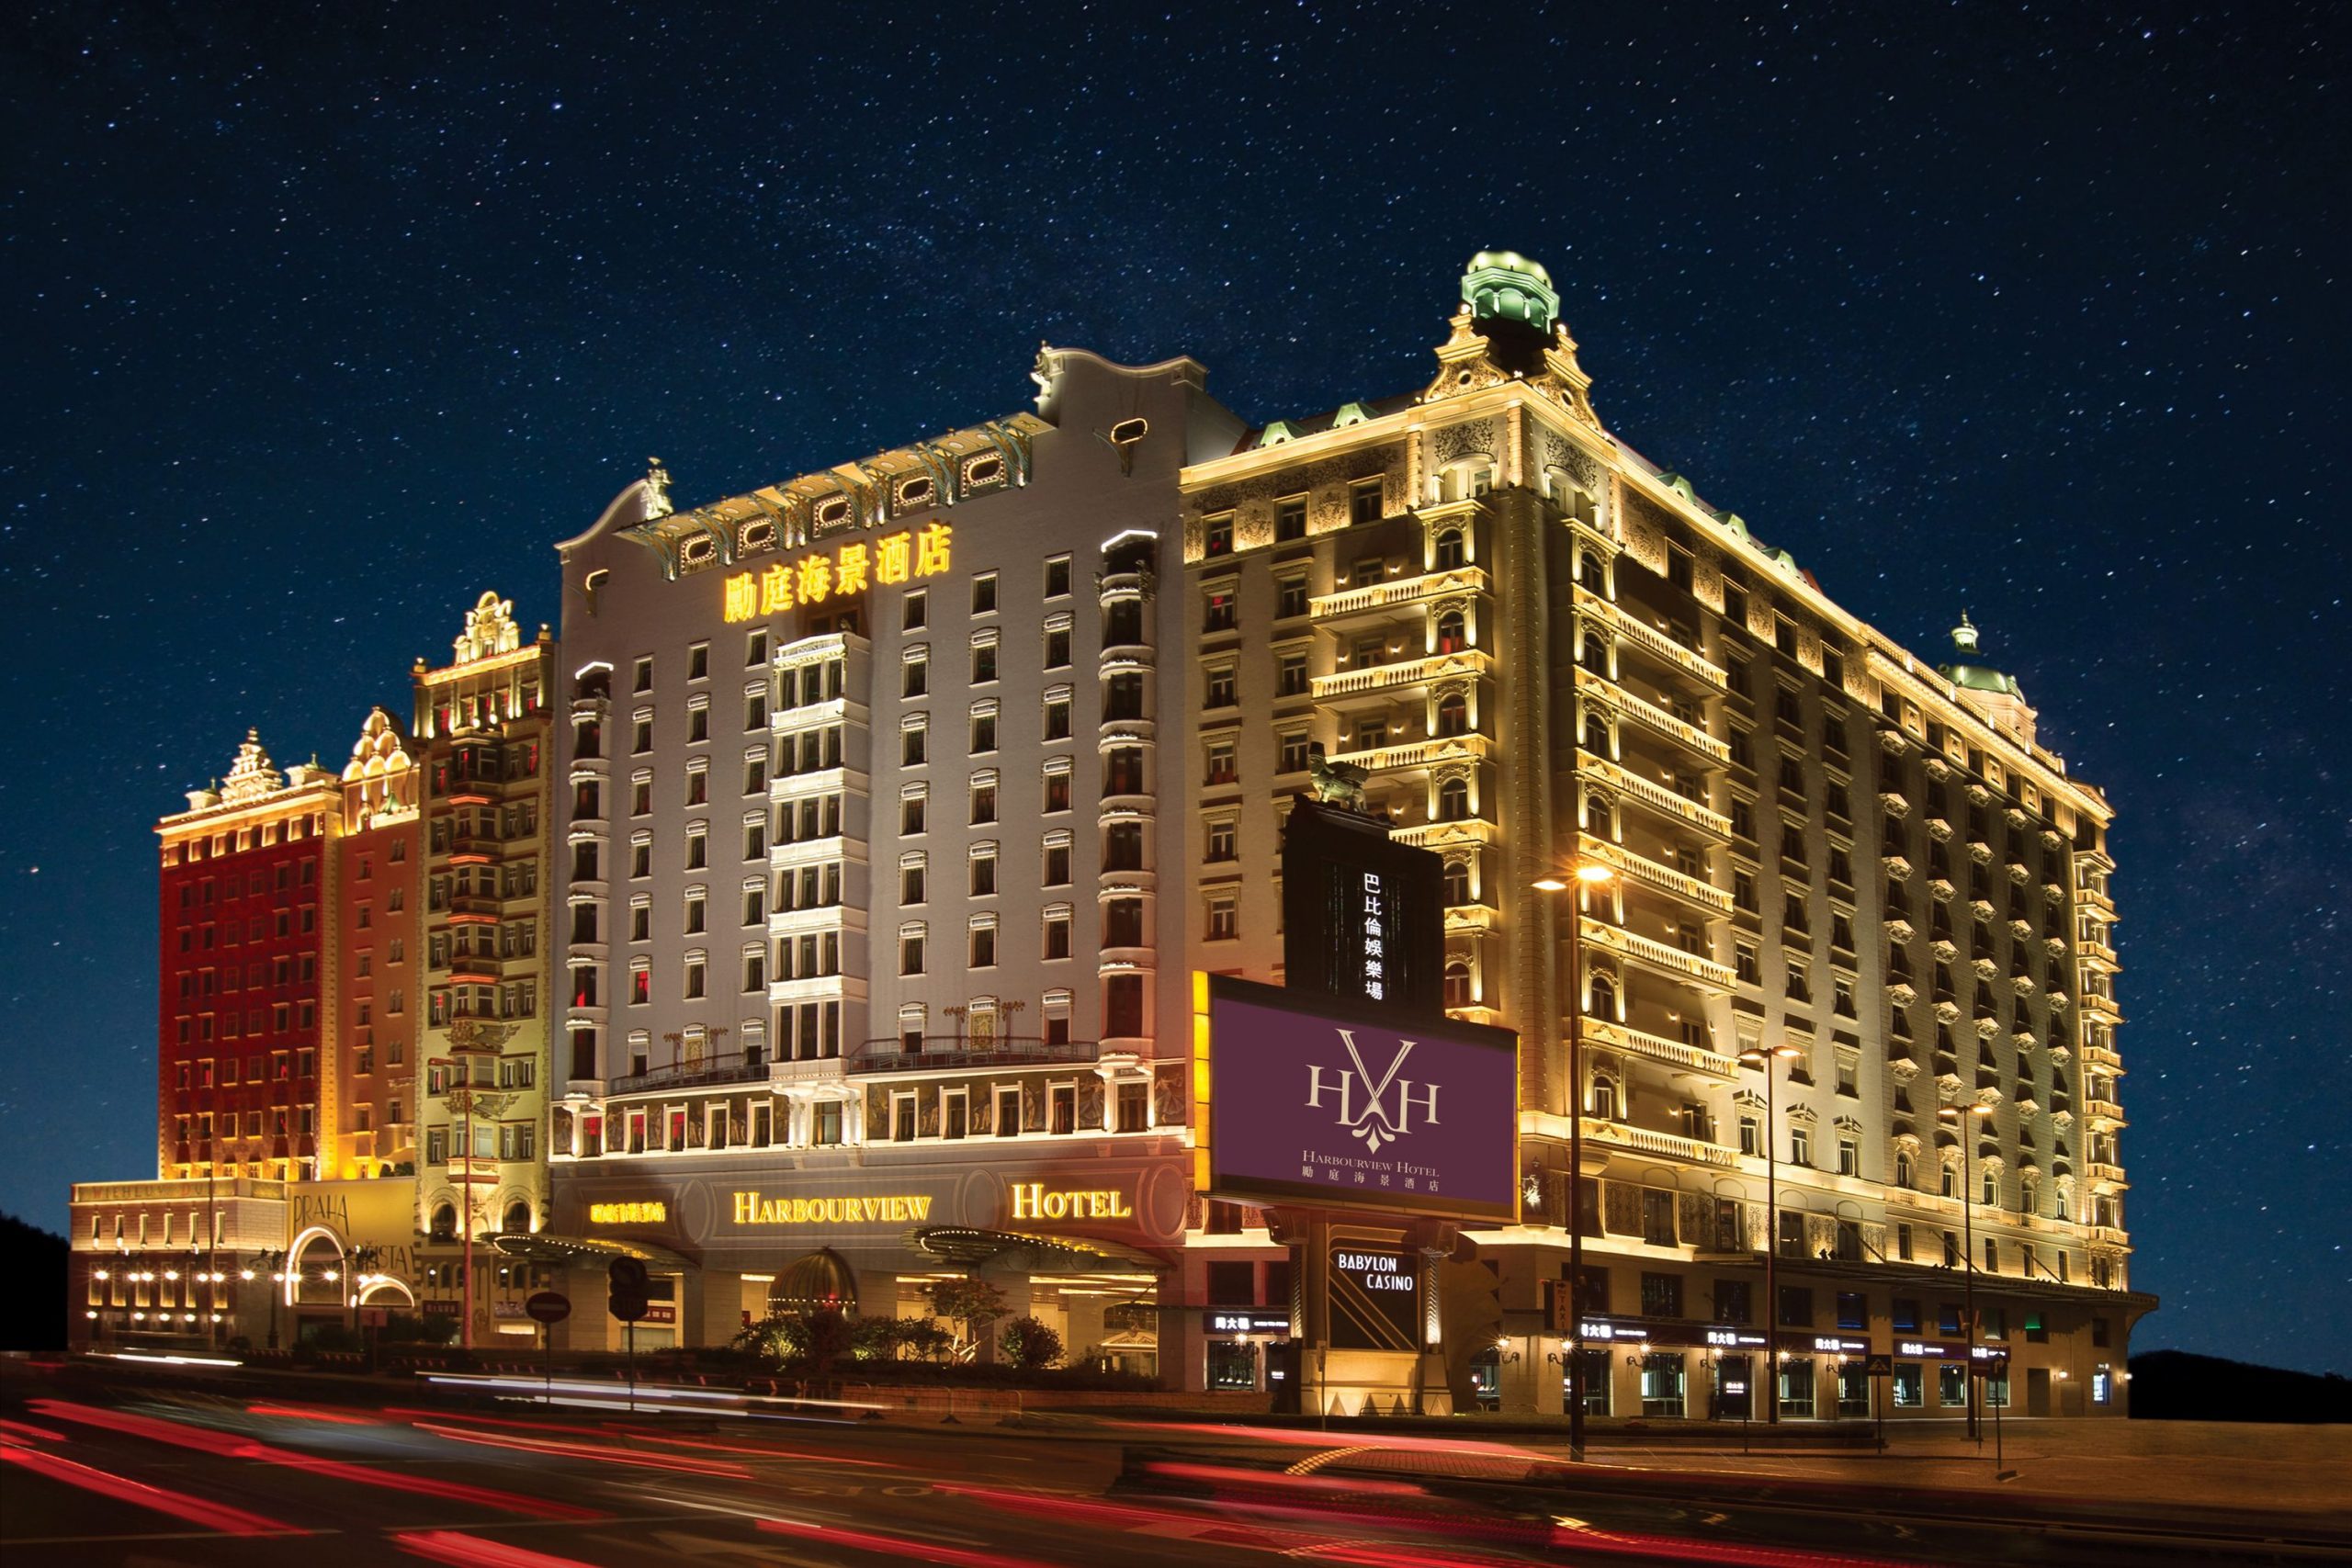 Harbourview Hotel Macau